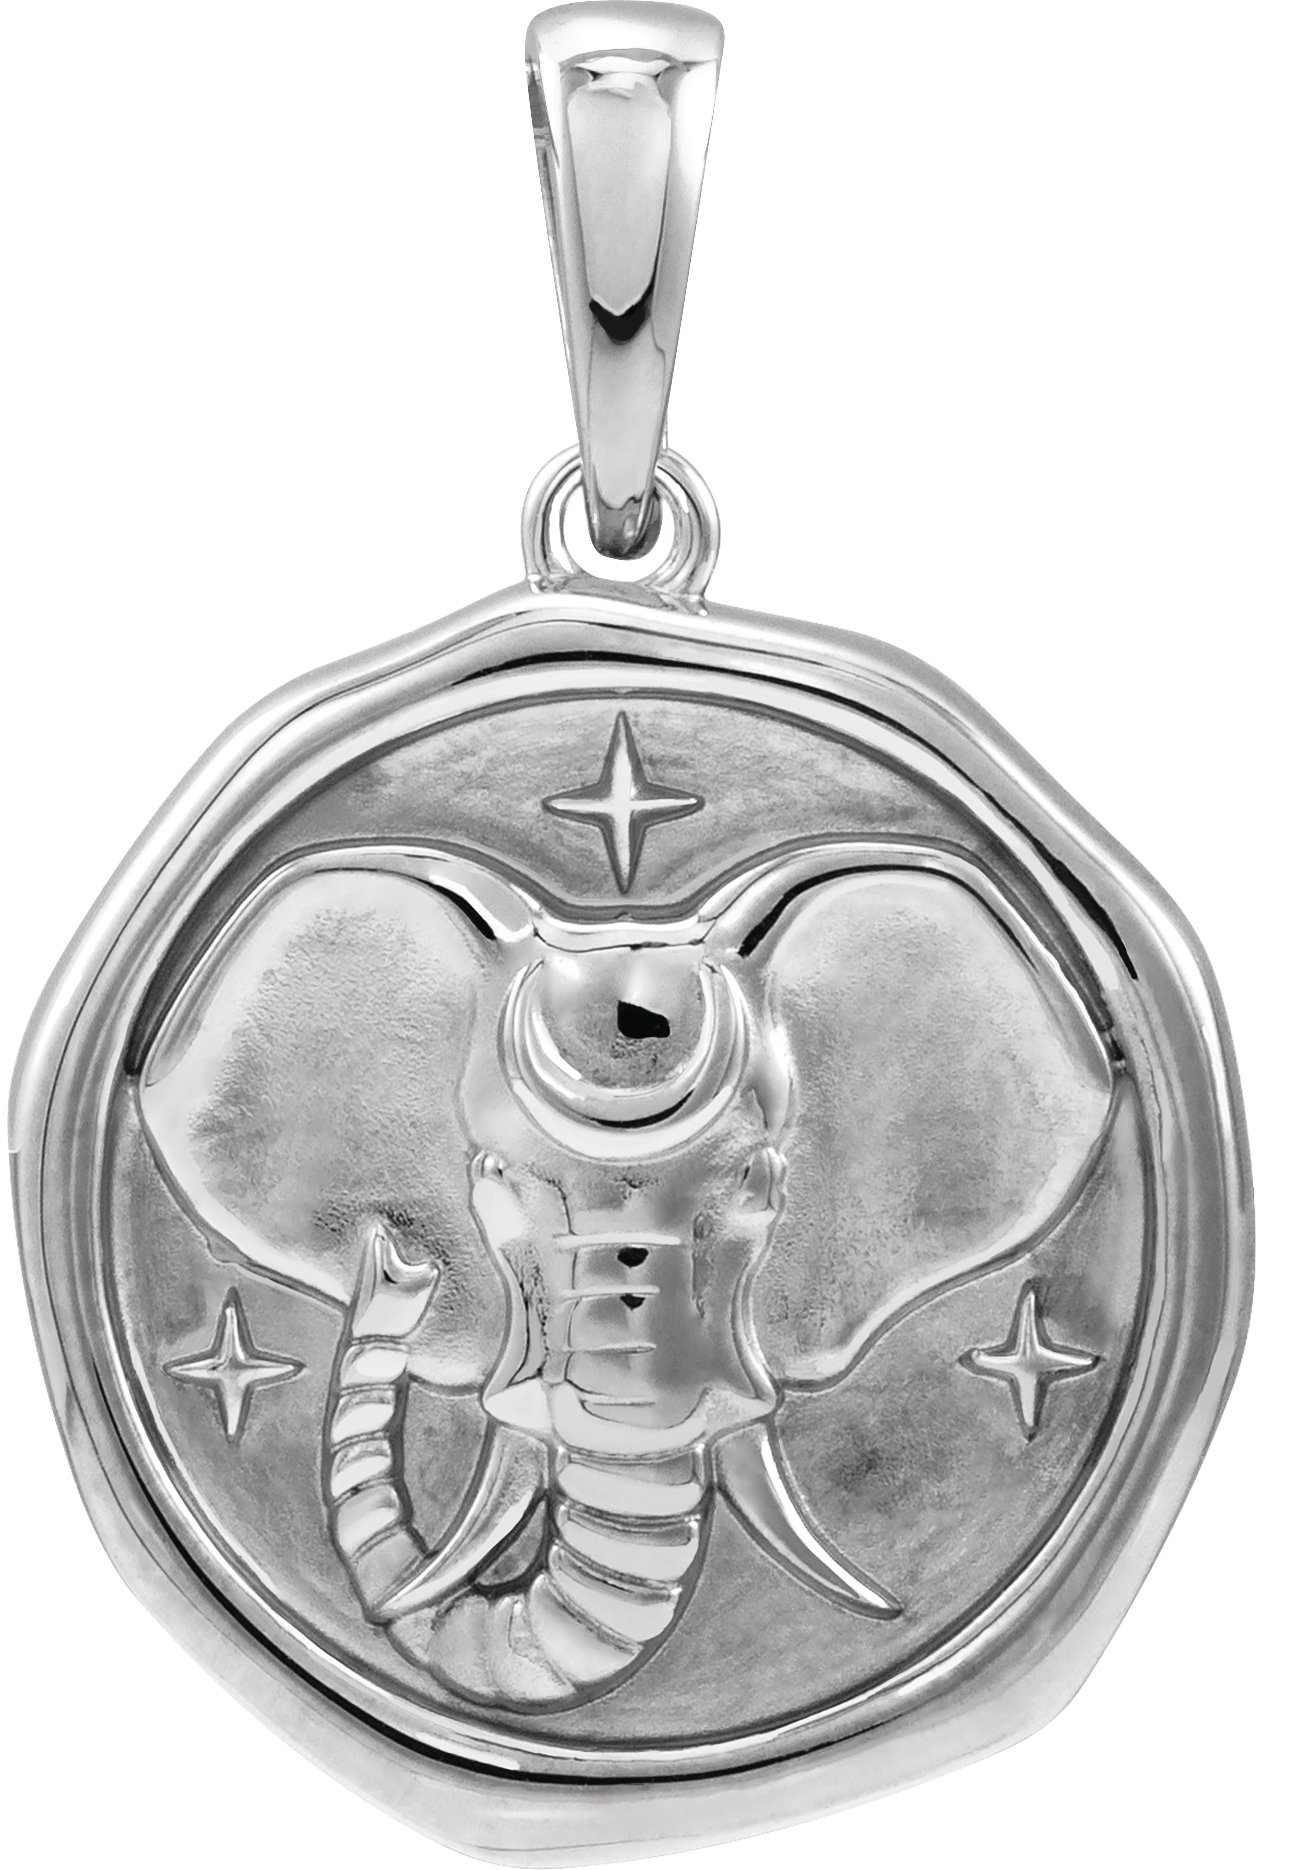 Sterling Silver Elephant Spirit Animal Pendant